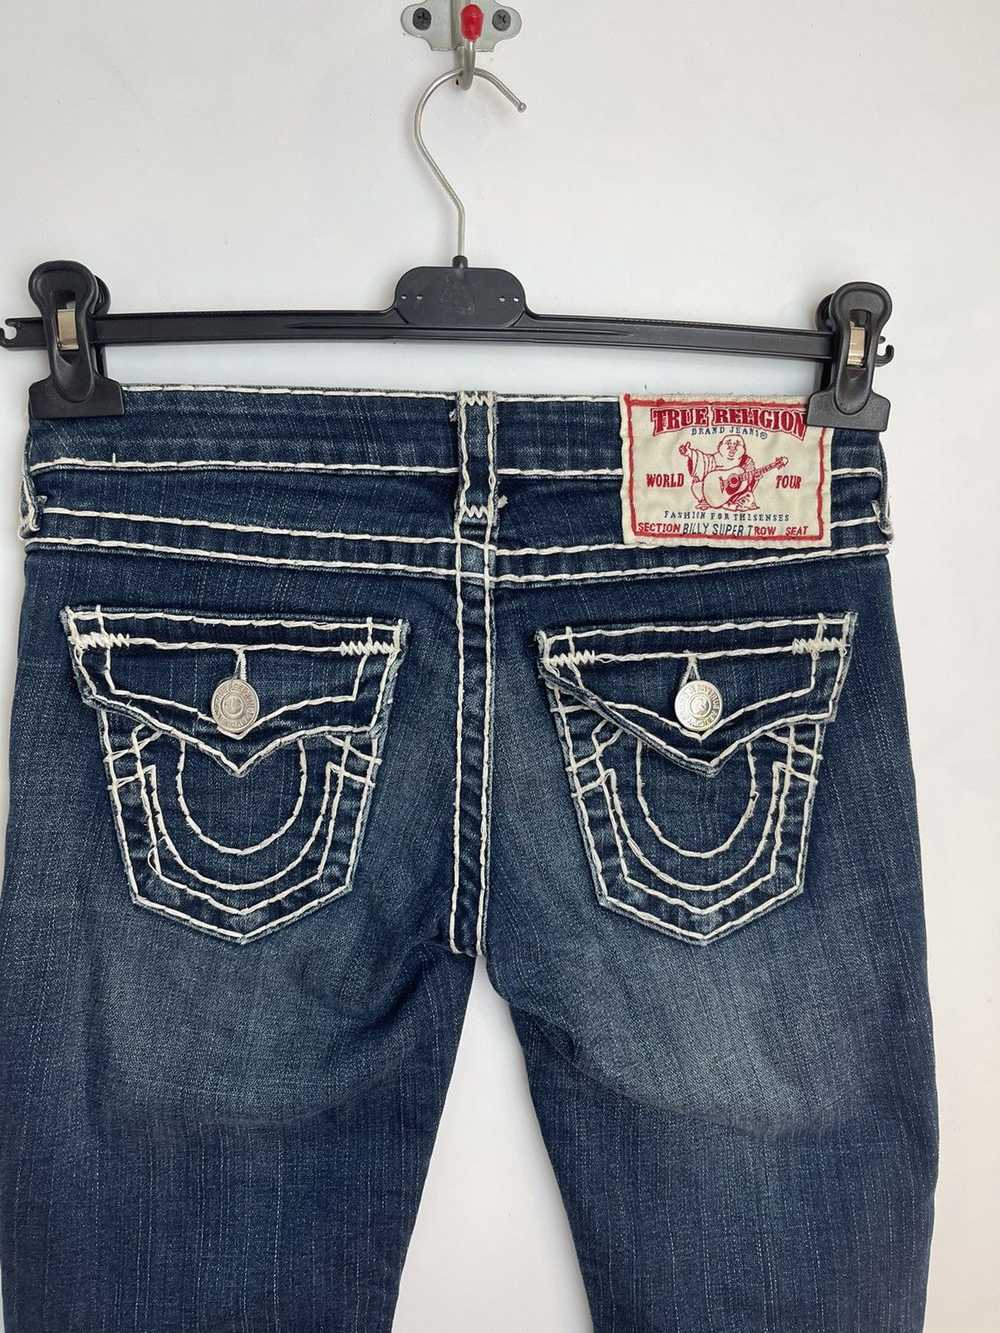 True Religion True Religion jeans made in USA - image 2